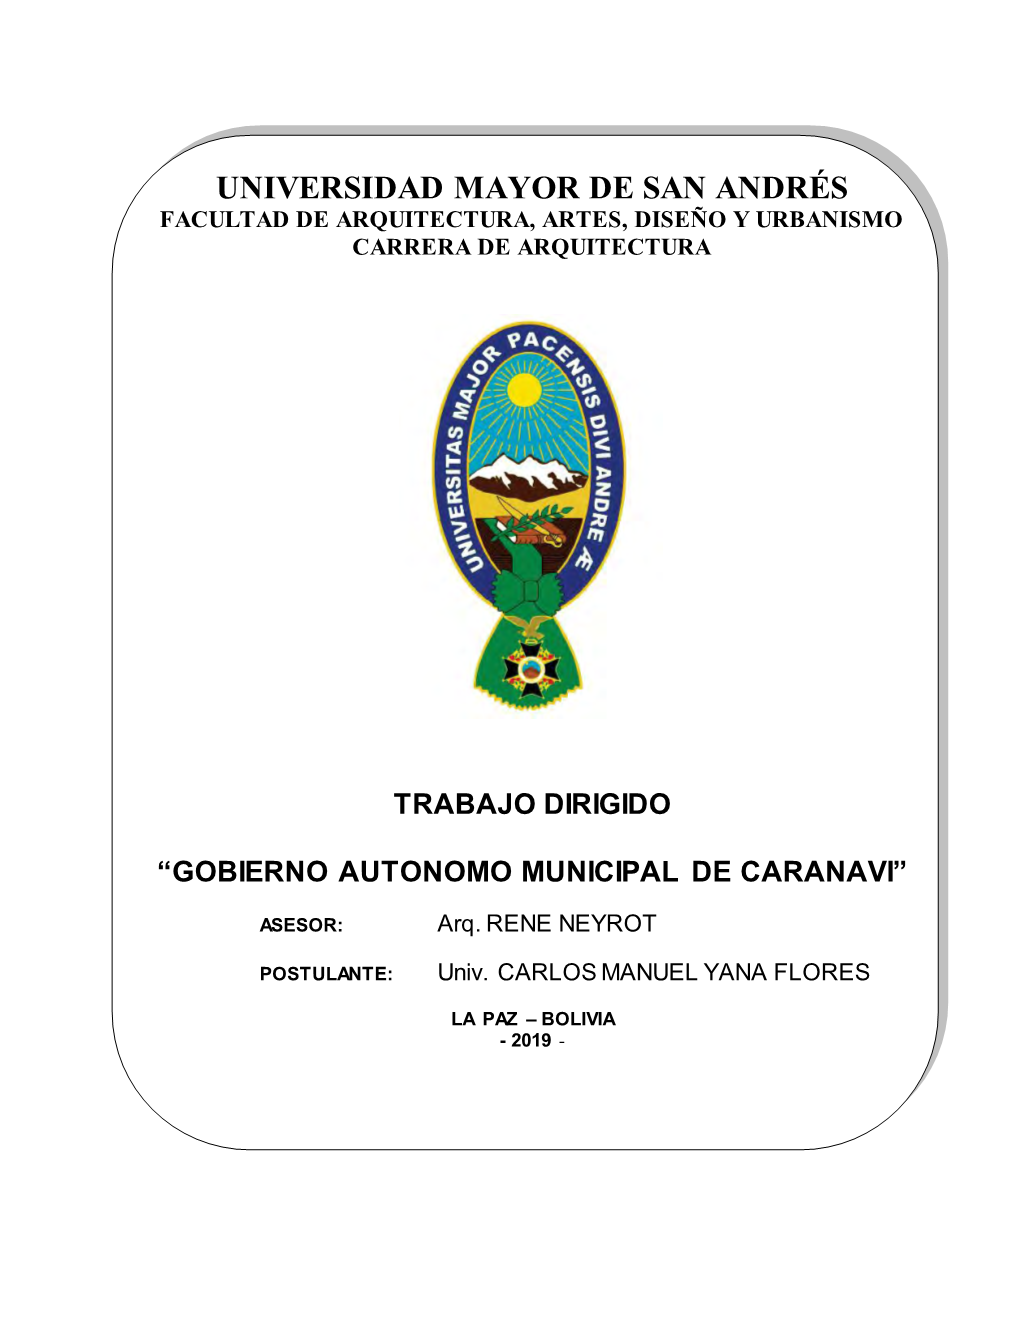 Trabajo Dirigido “Gobierno Autonomo Municipal De Caranavi”